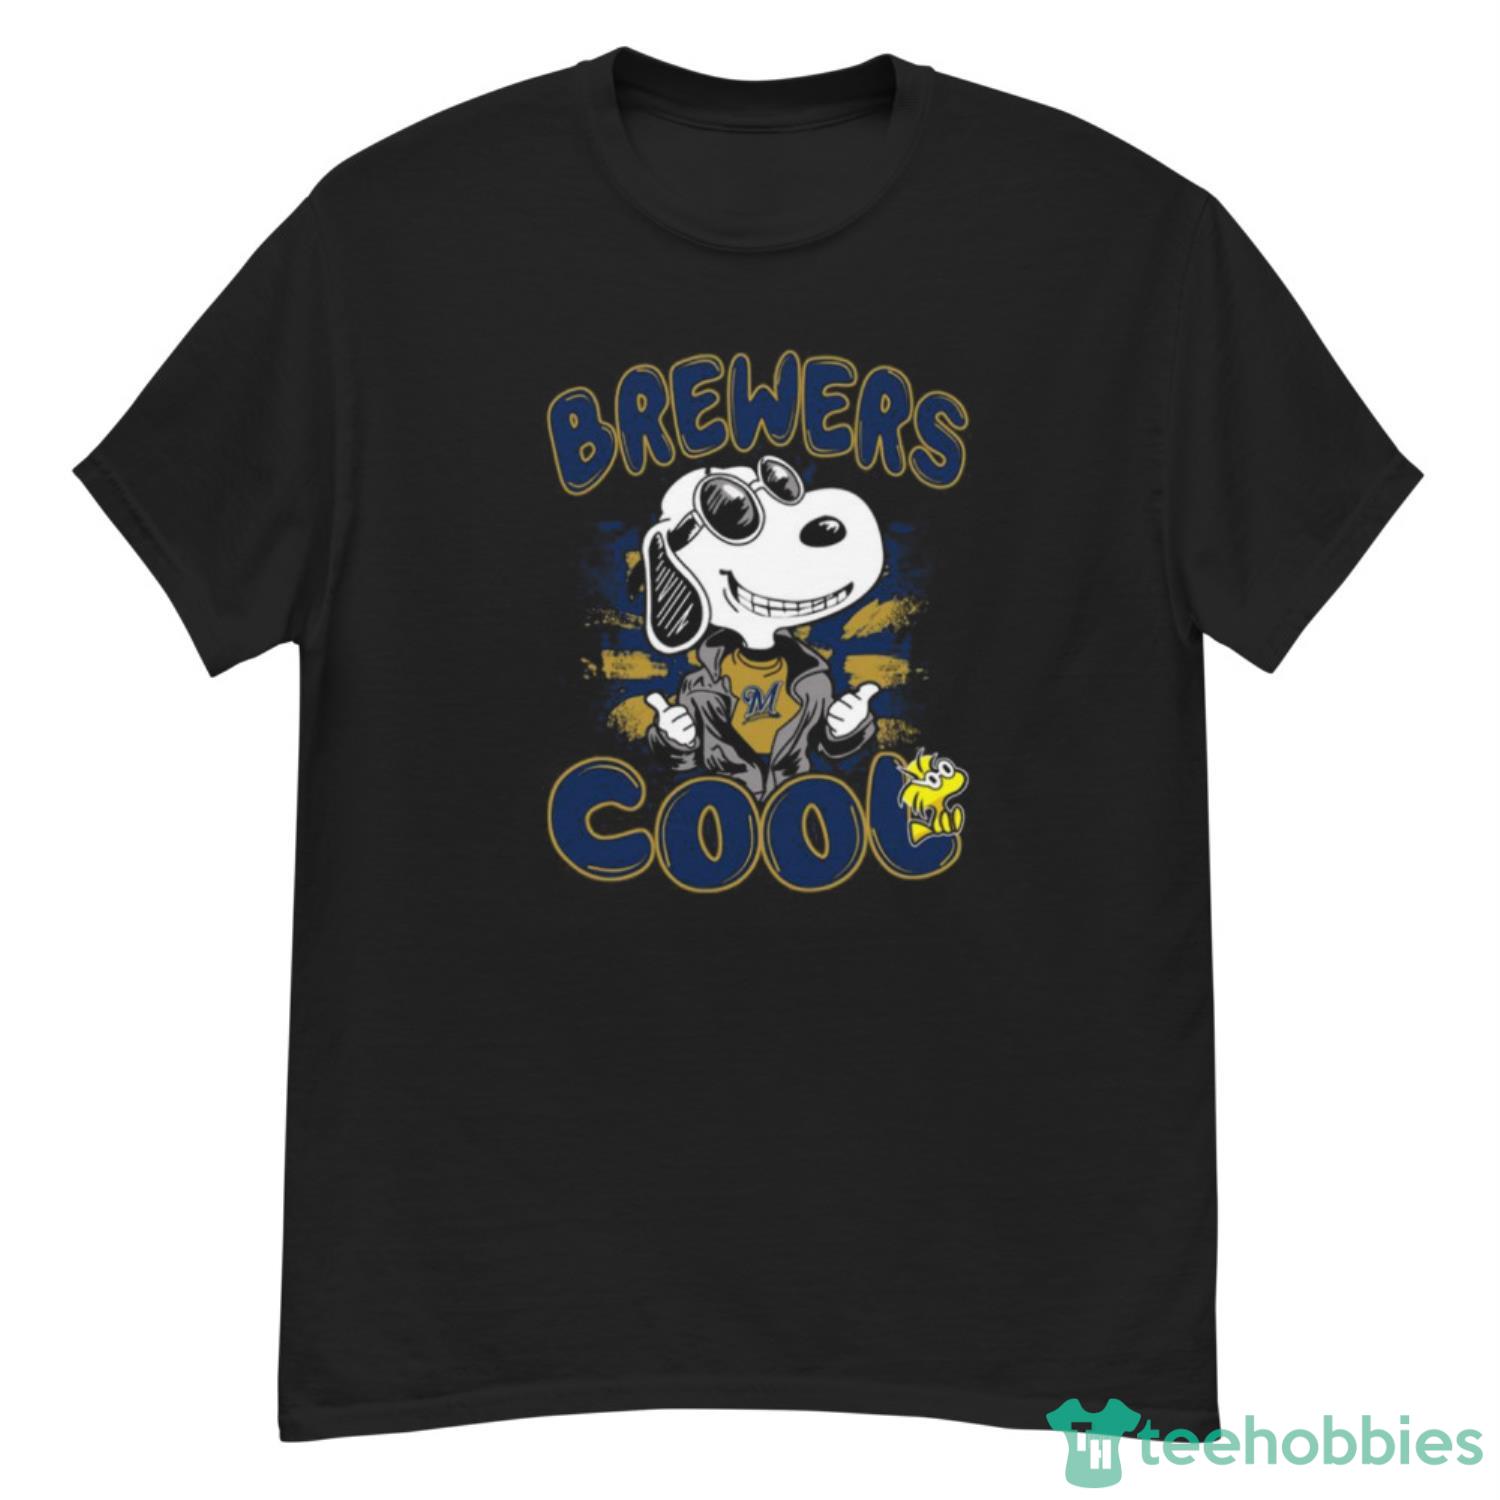 MLB Baseball Milwaukee Brewers Cool Snoopy Shirt T Shirt - G500 Men’s Classic T-Shirt